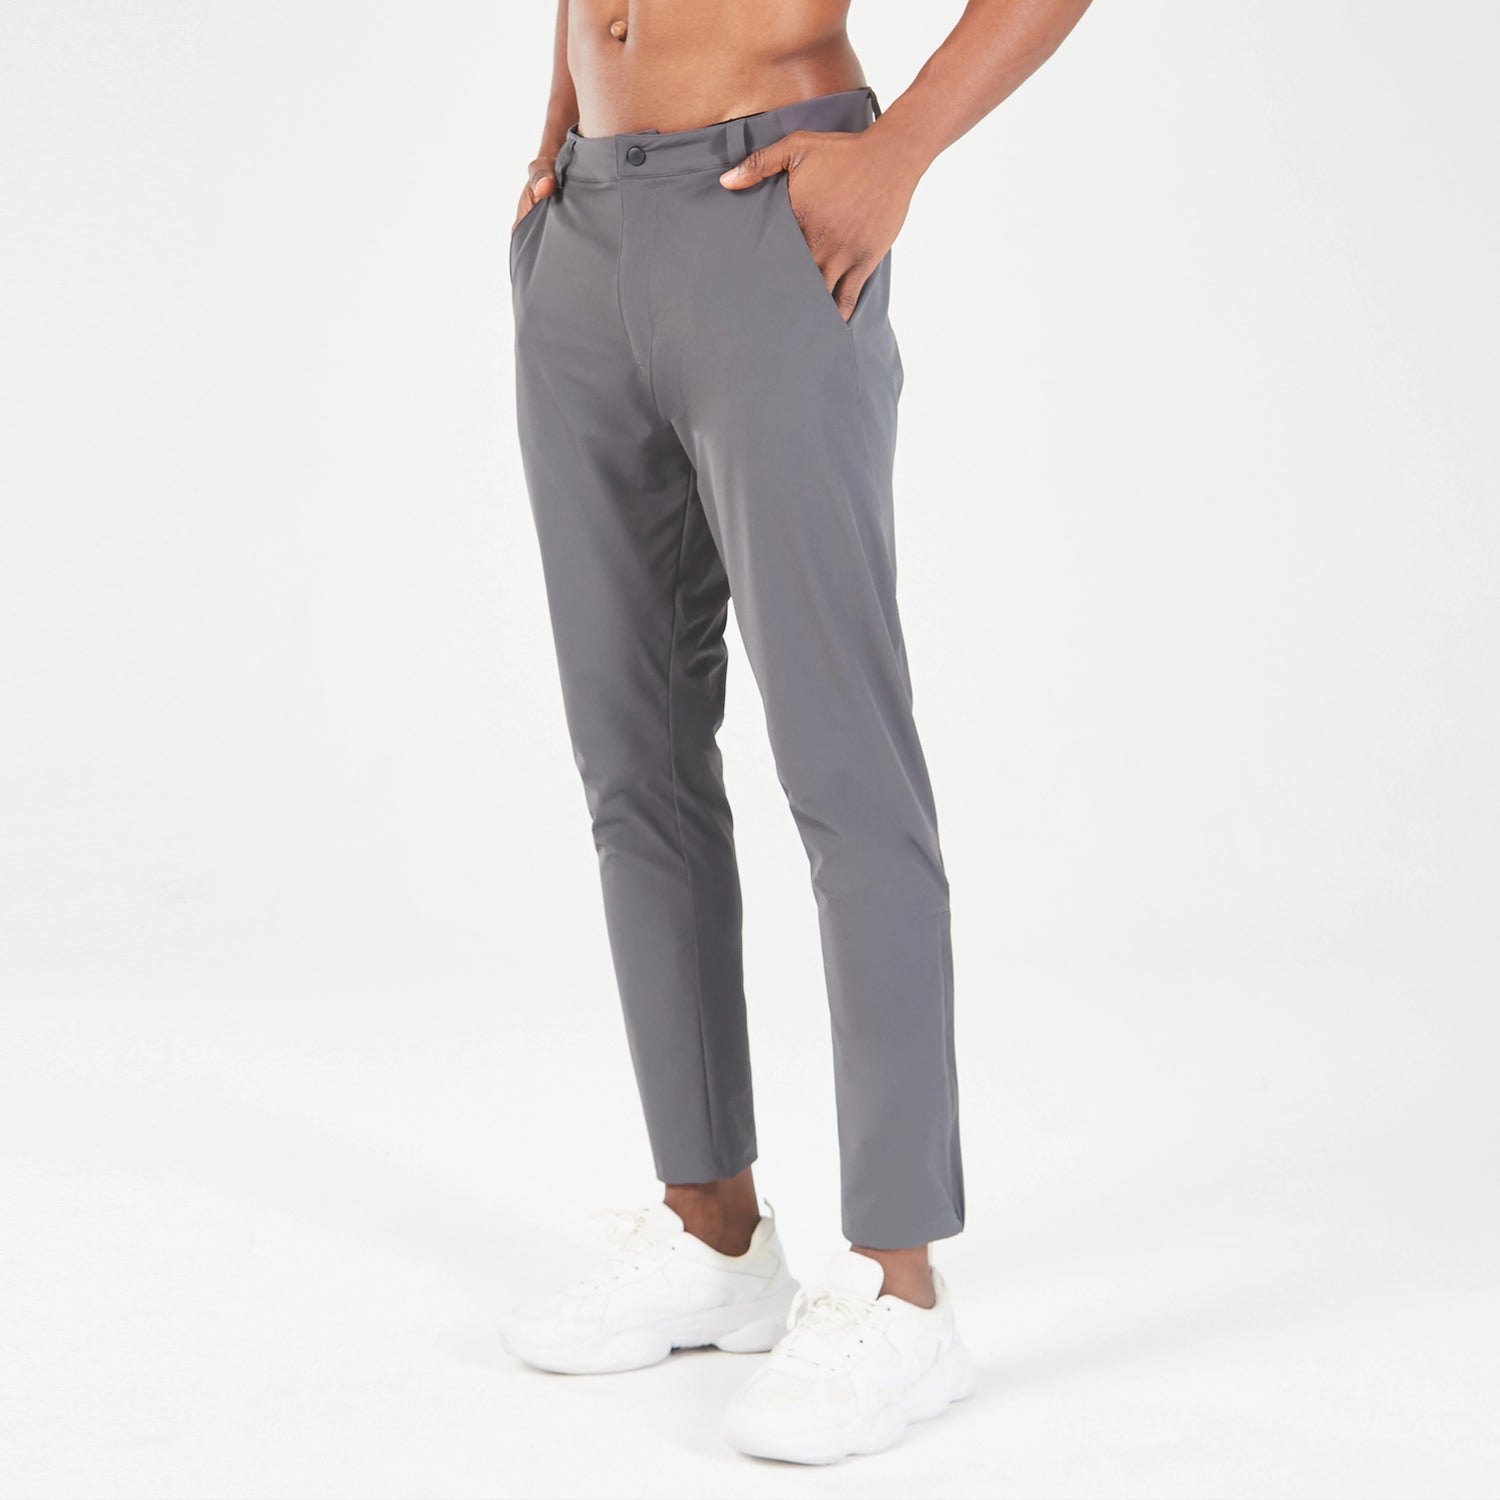 squatwolf-gym-wear-statement-ribbed-smart-pants-asphalt-workout-pants-for-men